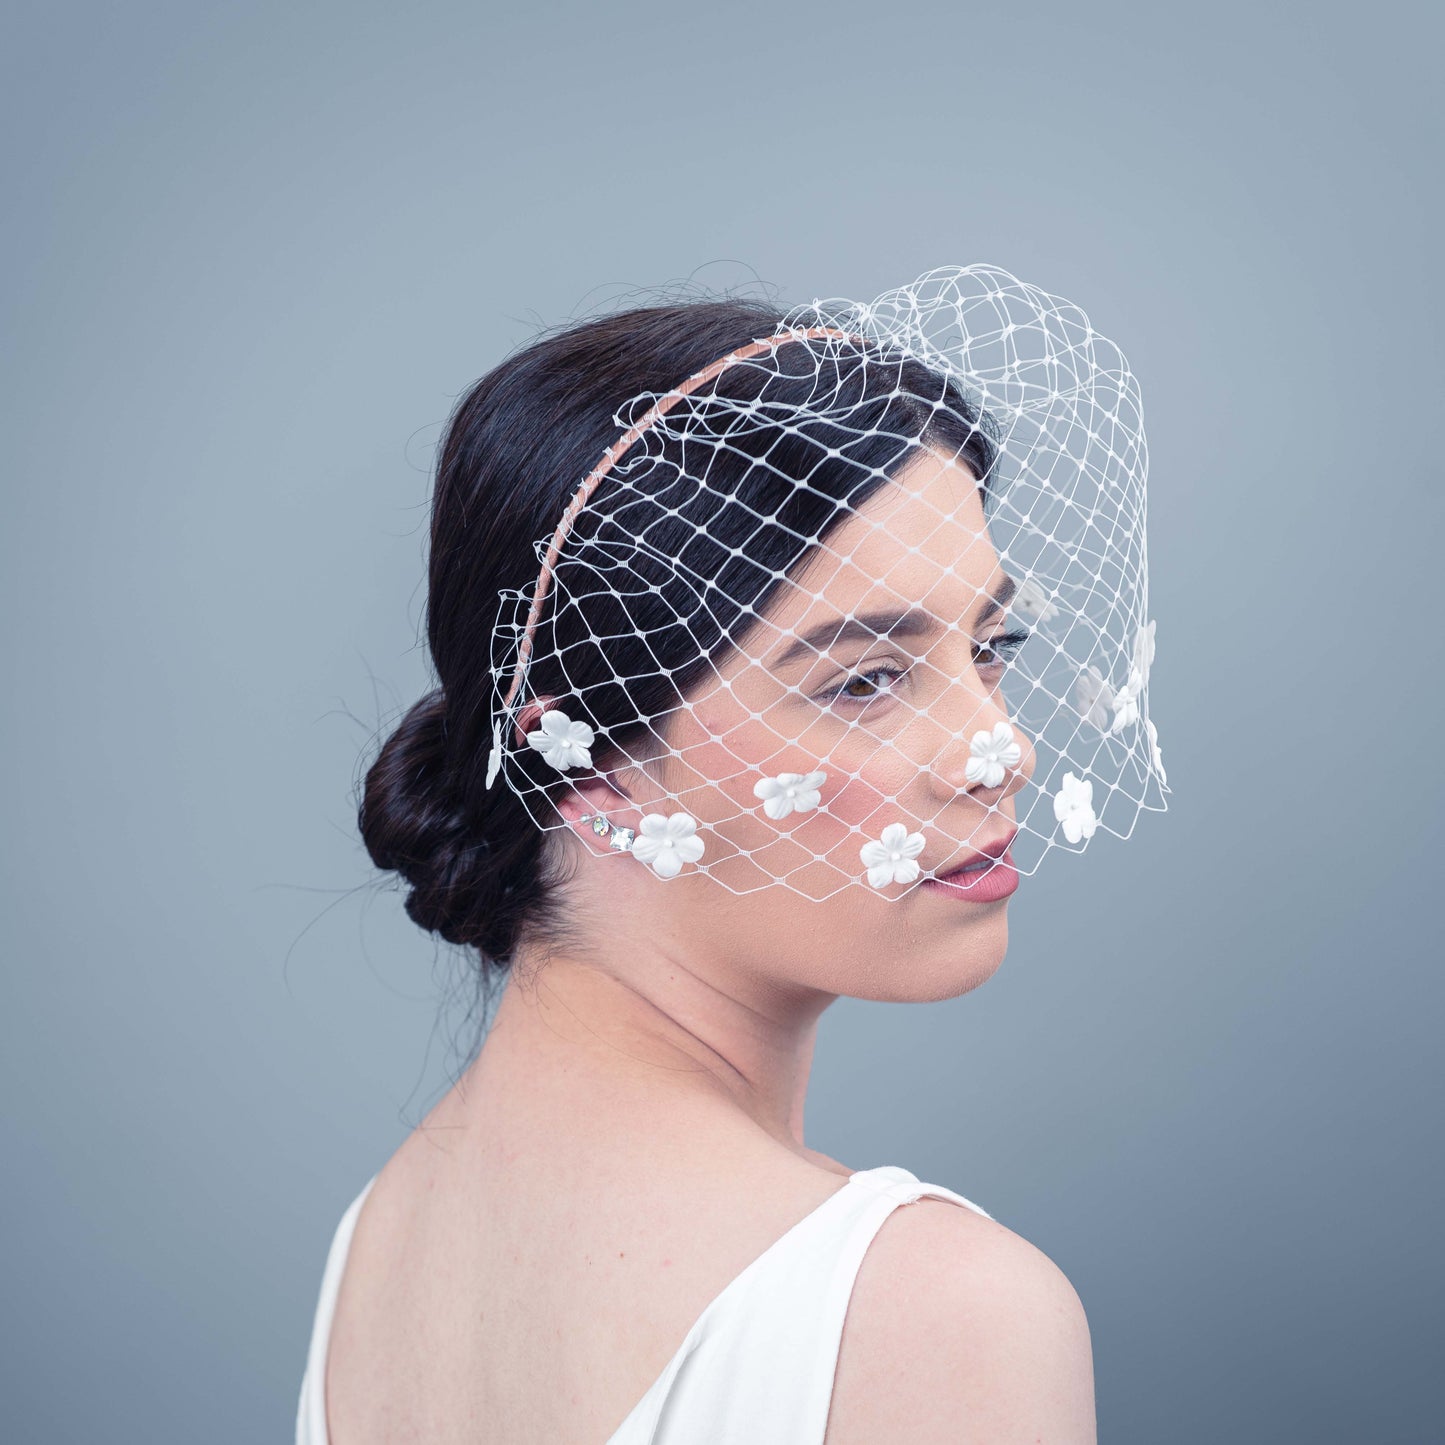 All of Me bridal birdcage veil on headband with silk flowers